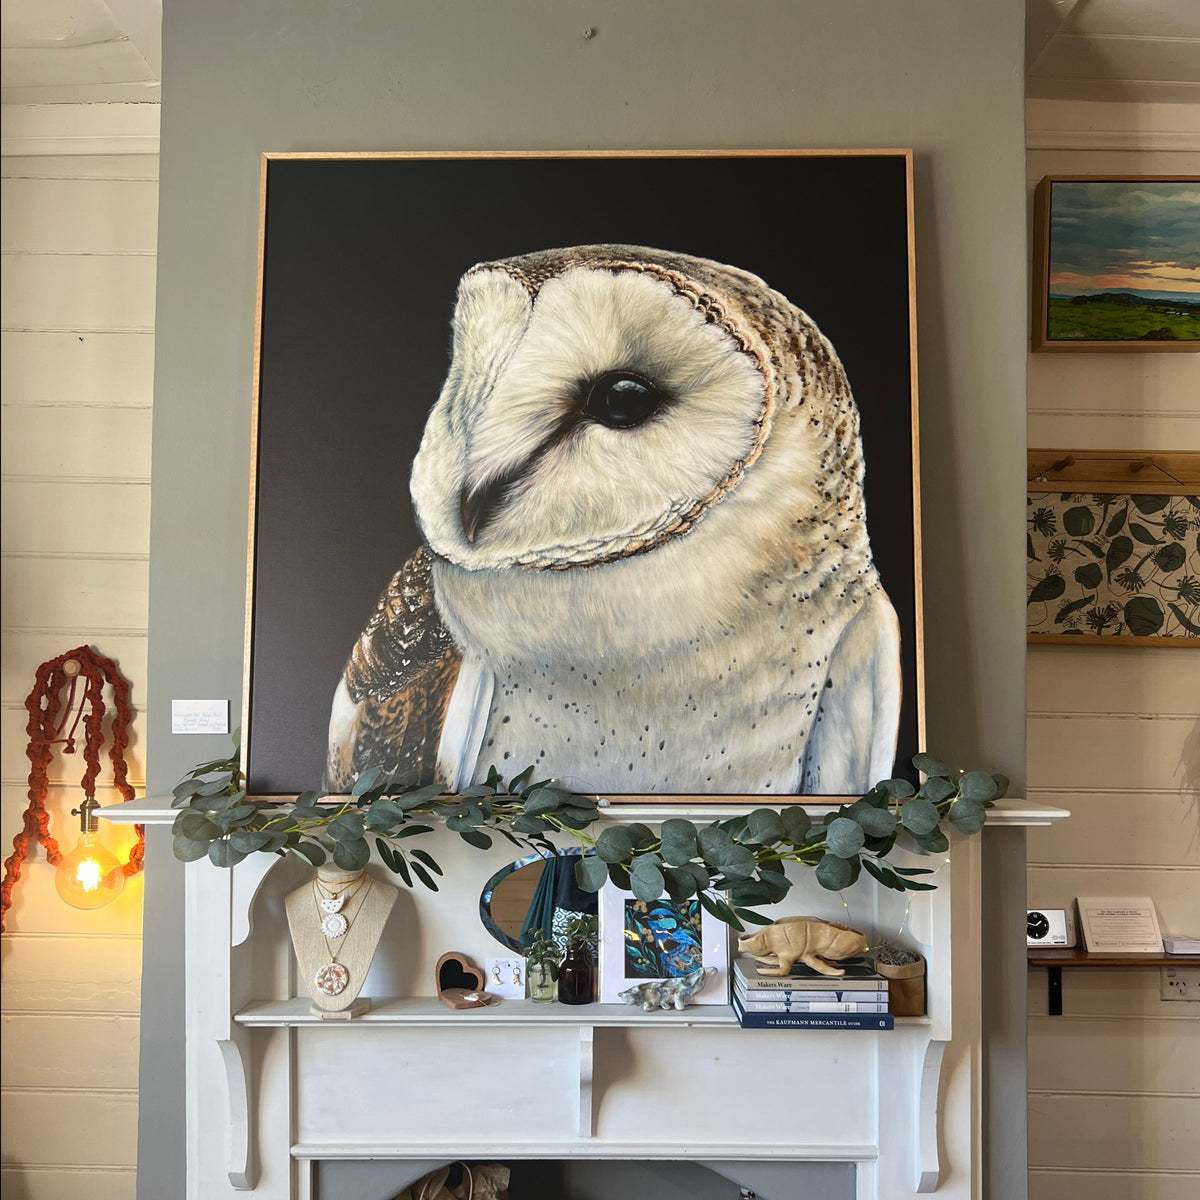 Luna The Barn Owl canvas print